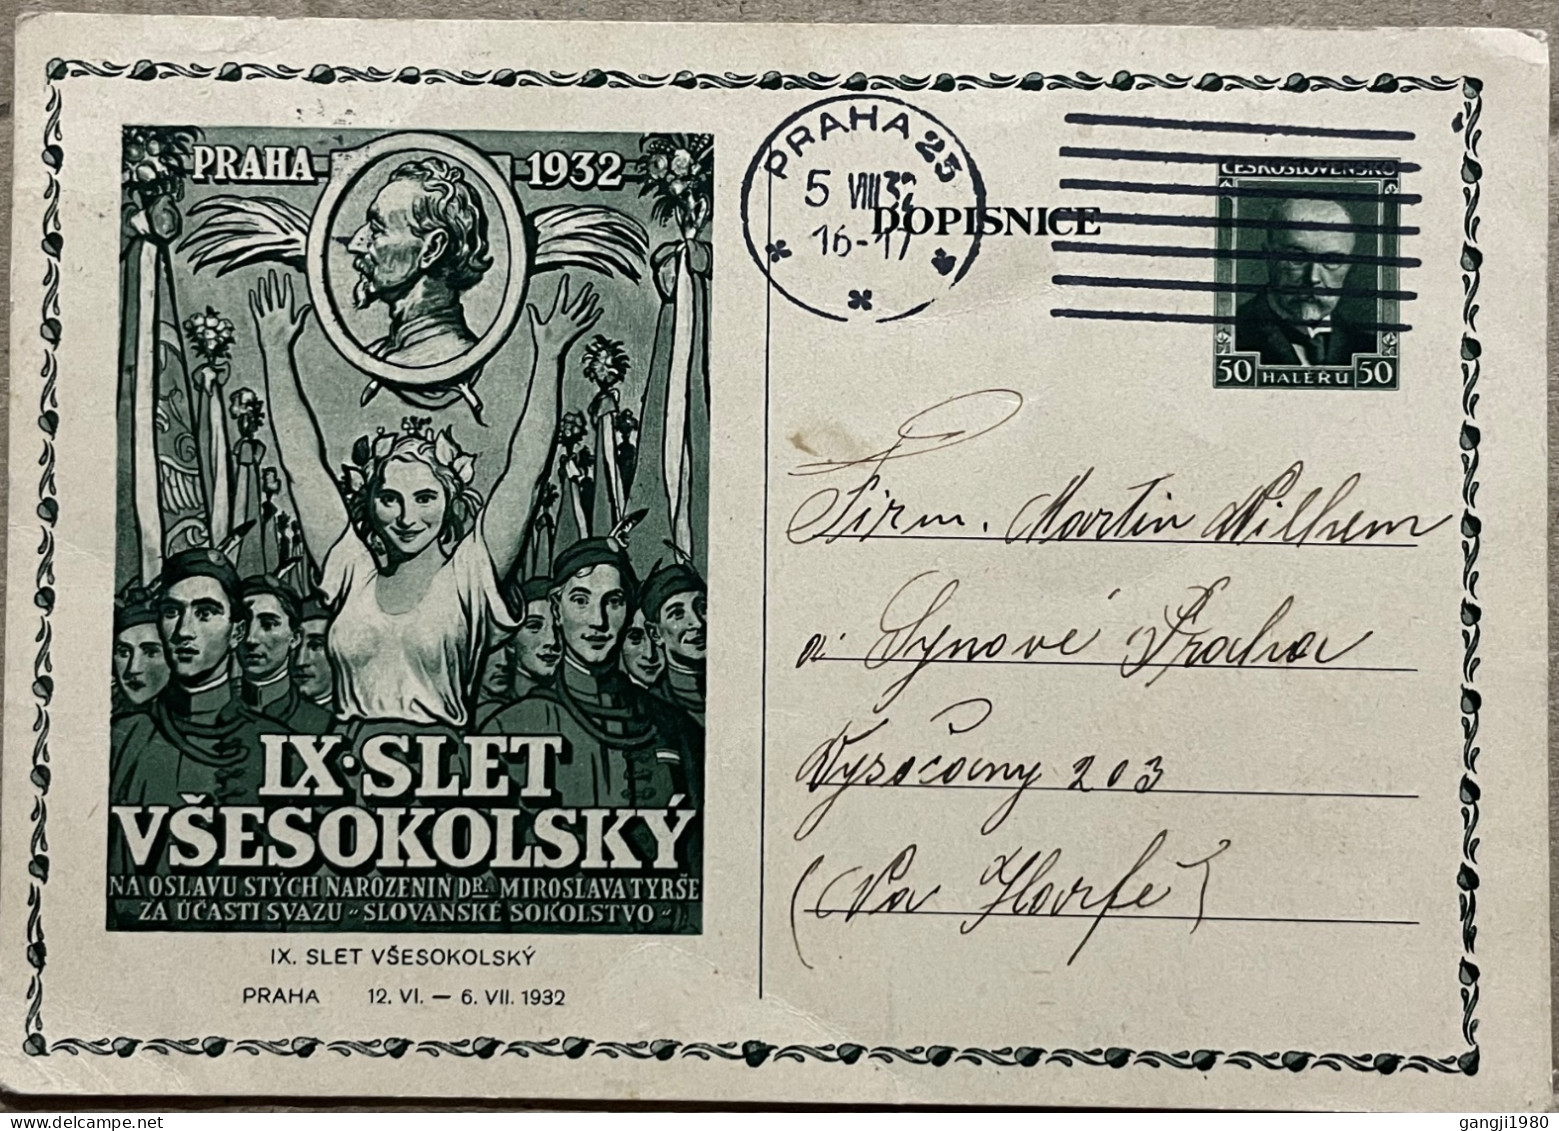 CZECHOSLOVAKIA 1932, STATIONERY CARD USED, ILLUSTRATE, WOMAN, CHARMING LADY, SLET YSESOKOLSKY, PRAHA CITY CANCEL - Covers & Documents